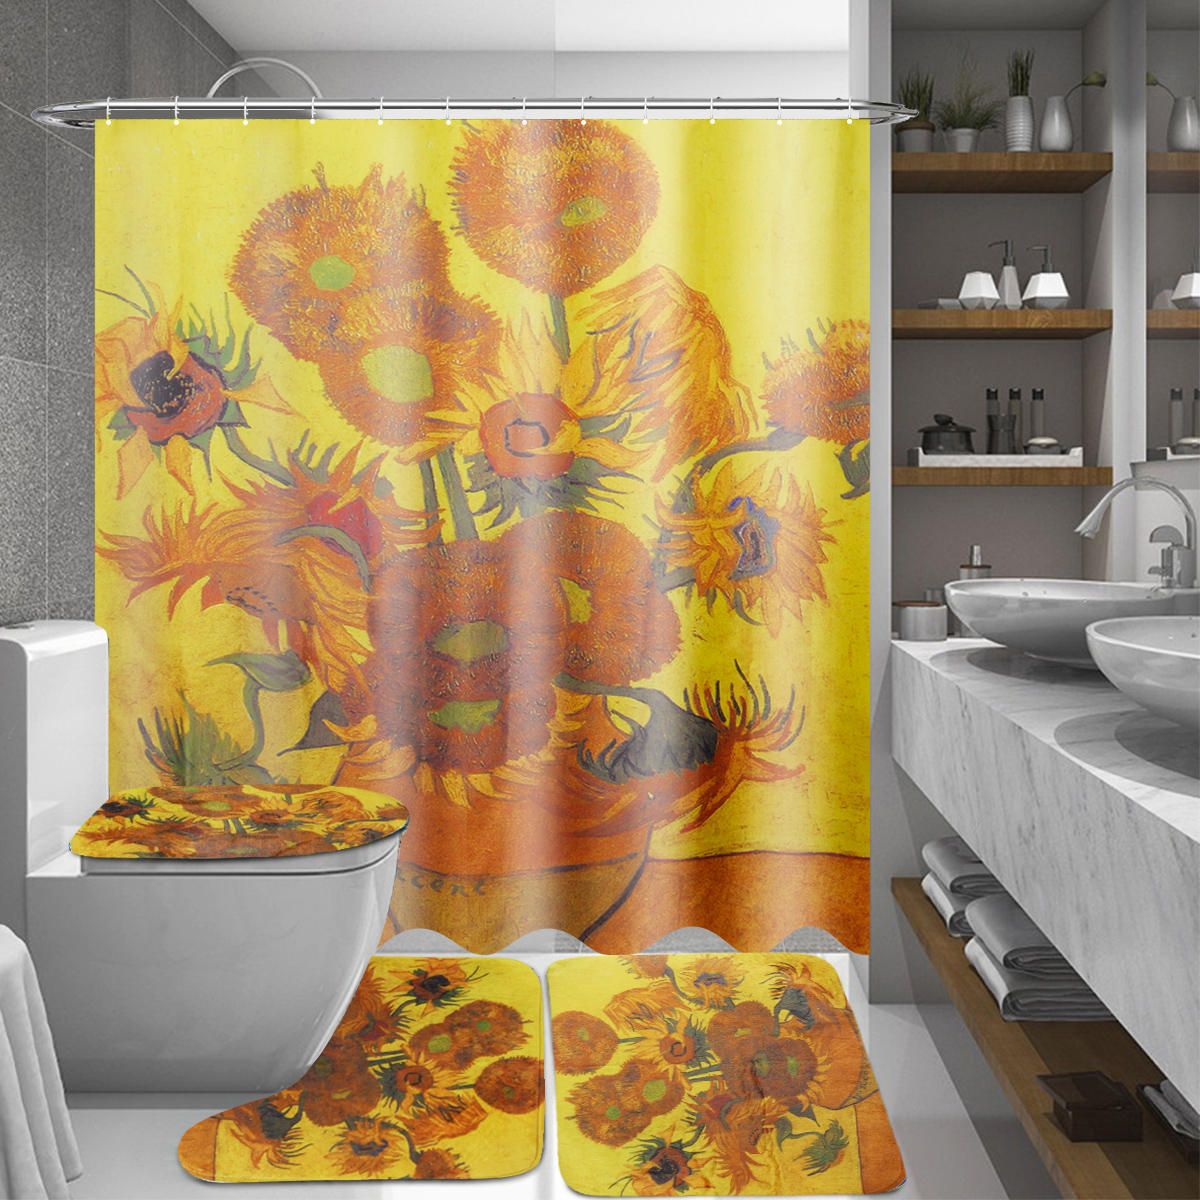 180x180cm Sunflower Bath Fabric Shower Curtains Waterproof Lid Toilet Cover Mat